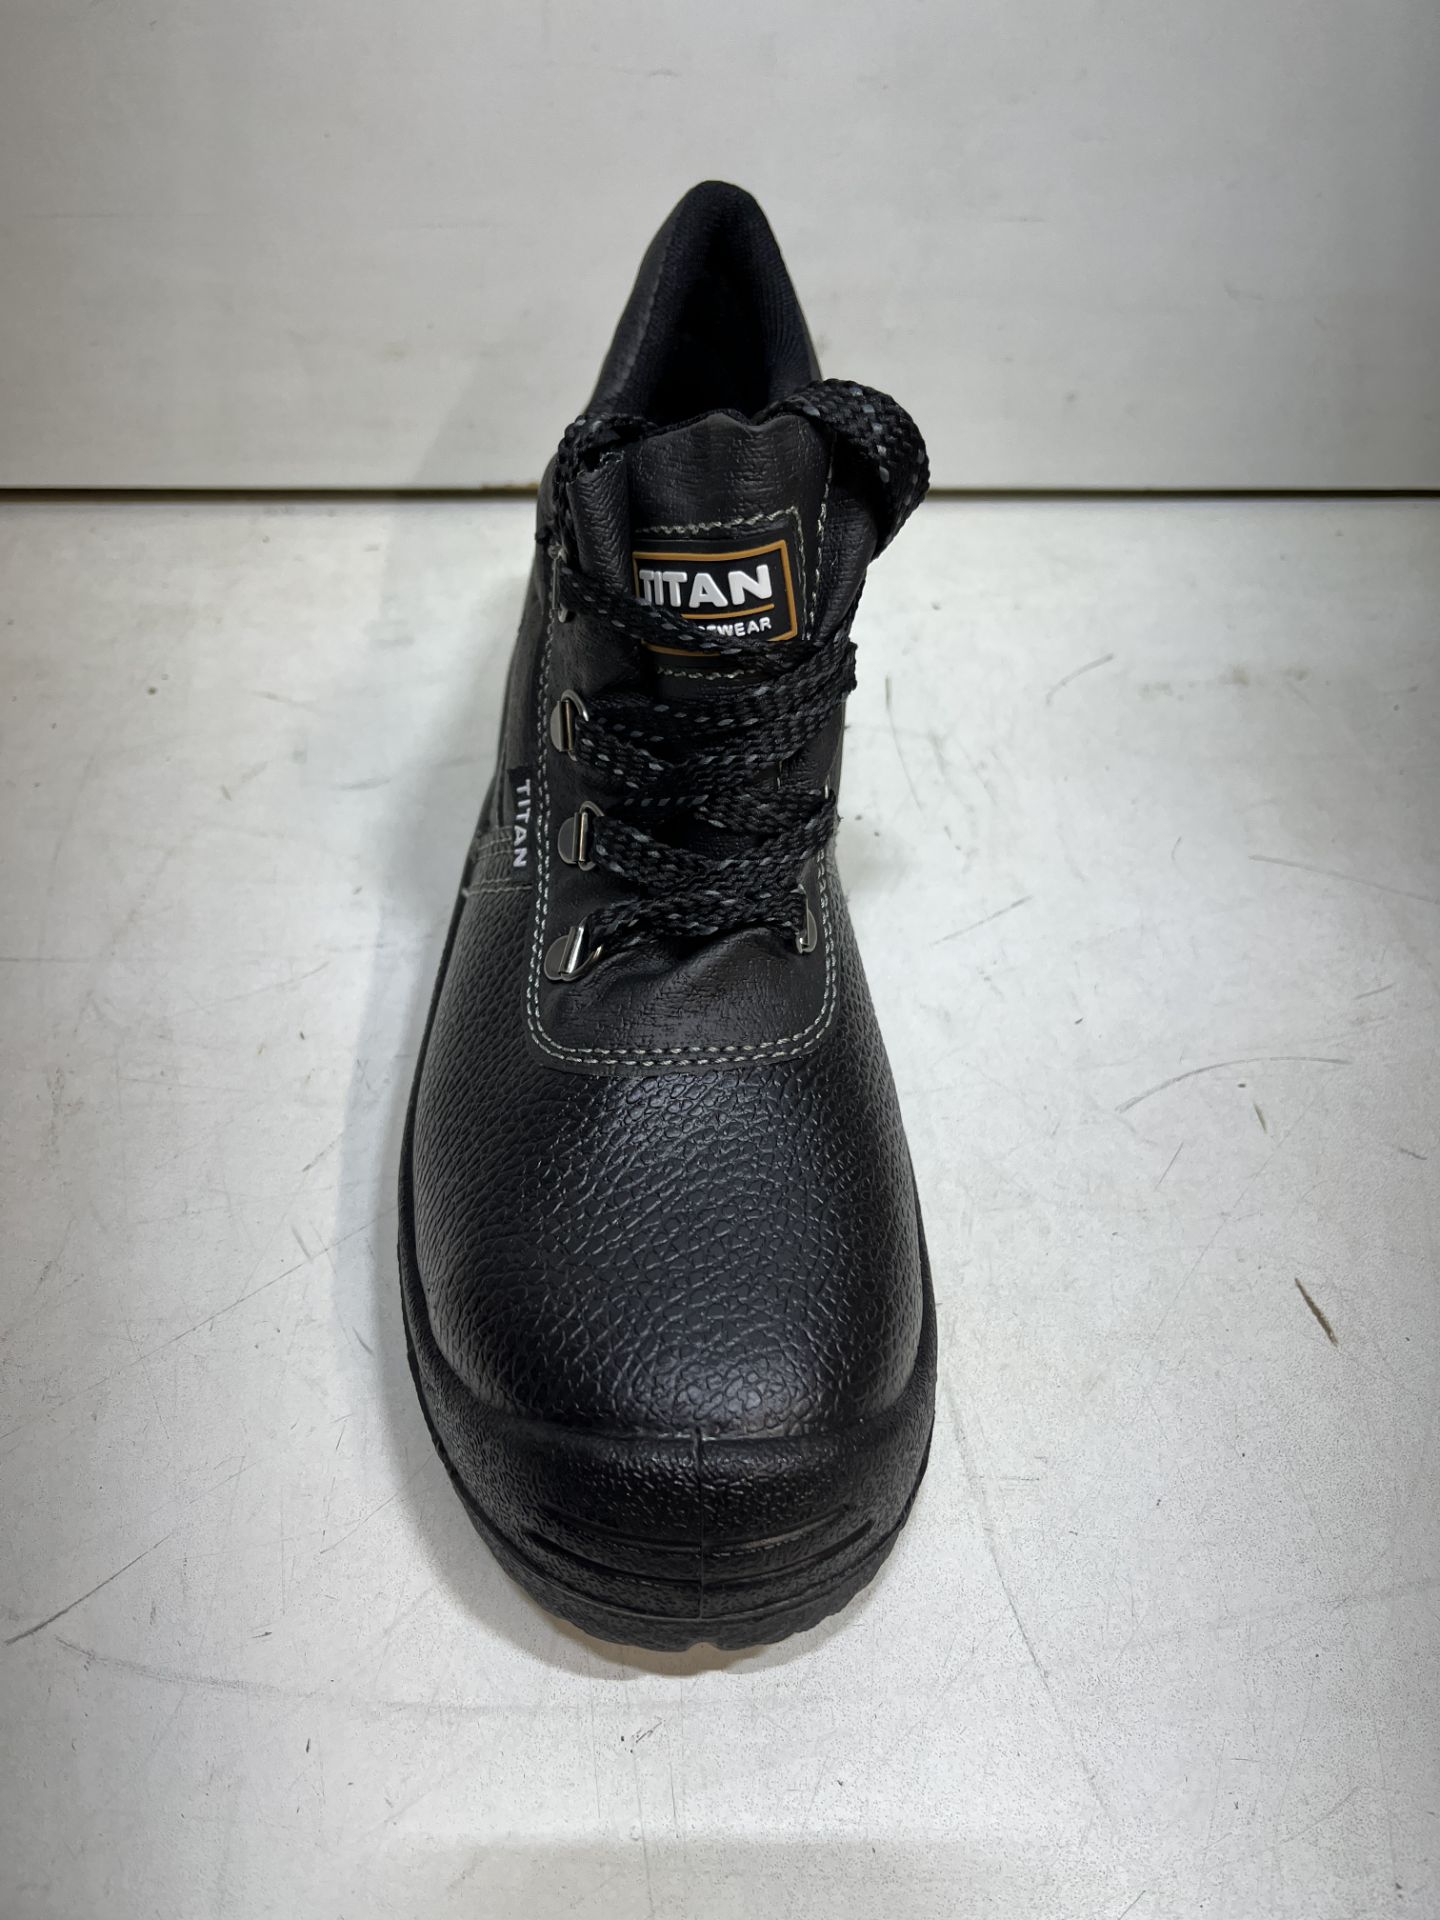 Titan Mercury SBP Black Safety Boots | UK 6 - Image 3 of 4